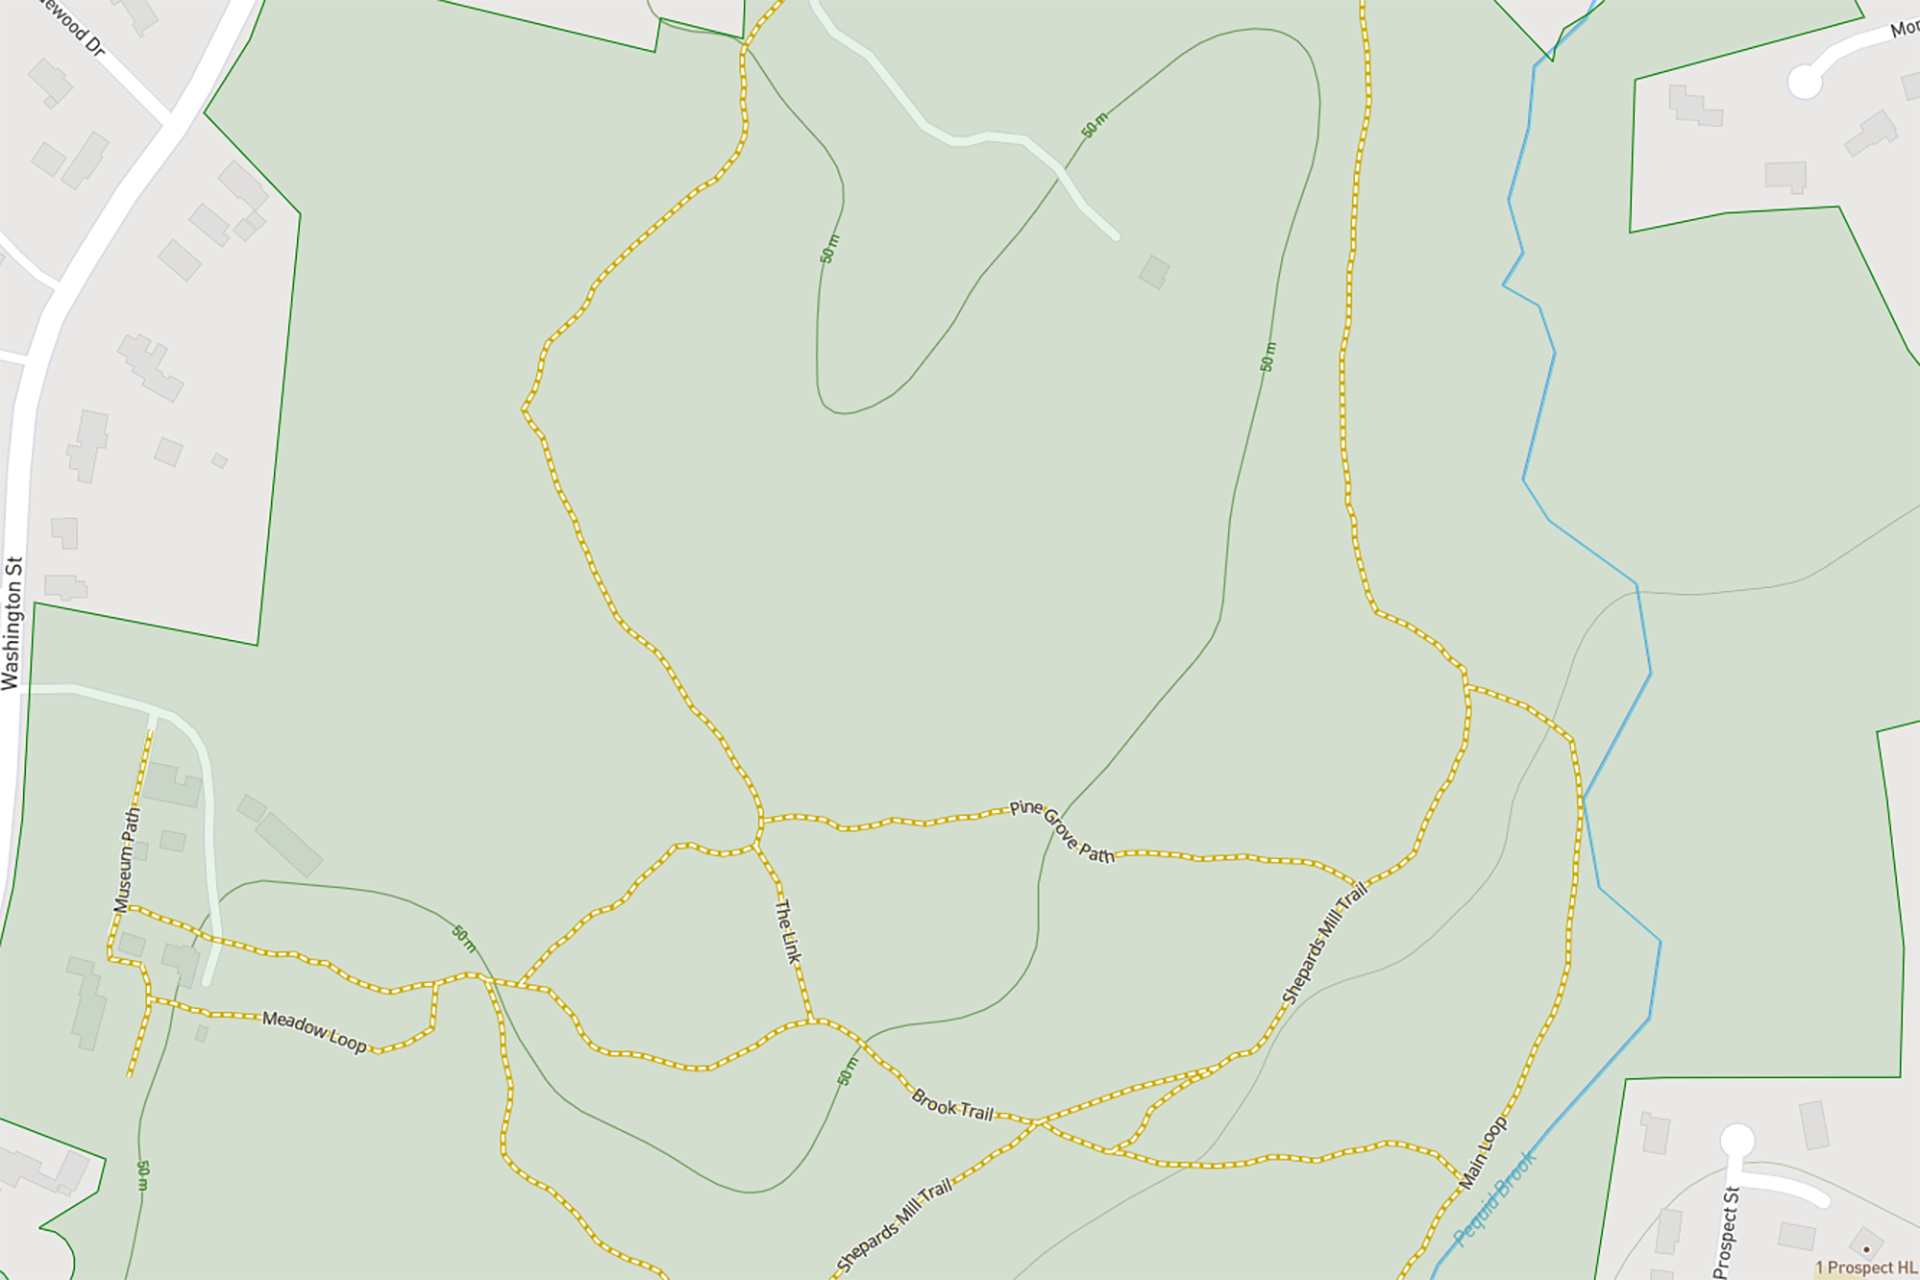 Thumbnail of MABA's digital trail map